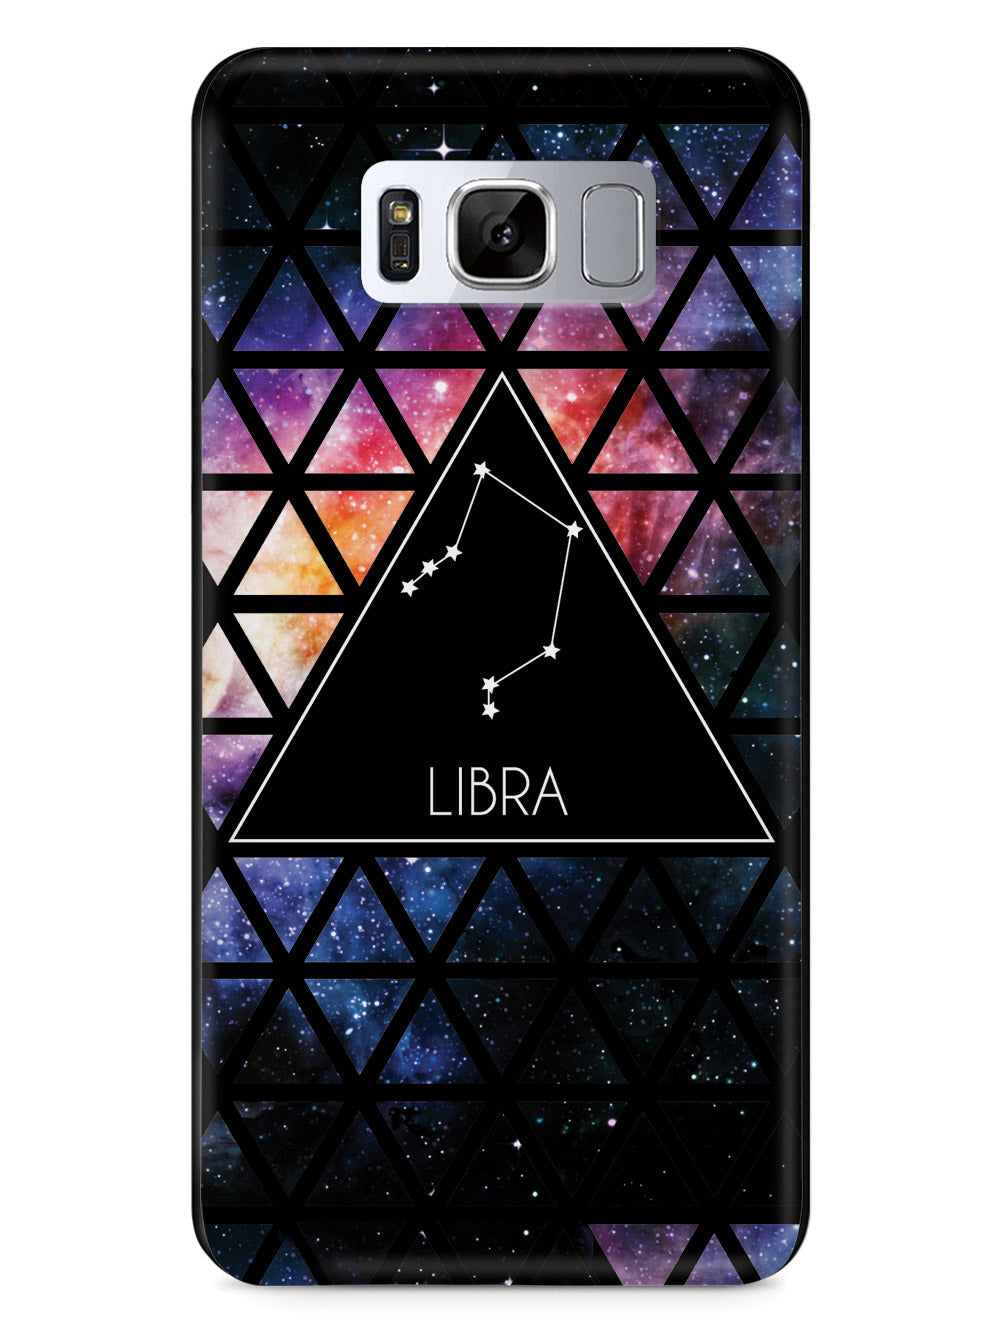 Zodiac Constellation - Libra Case